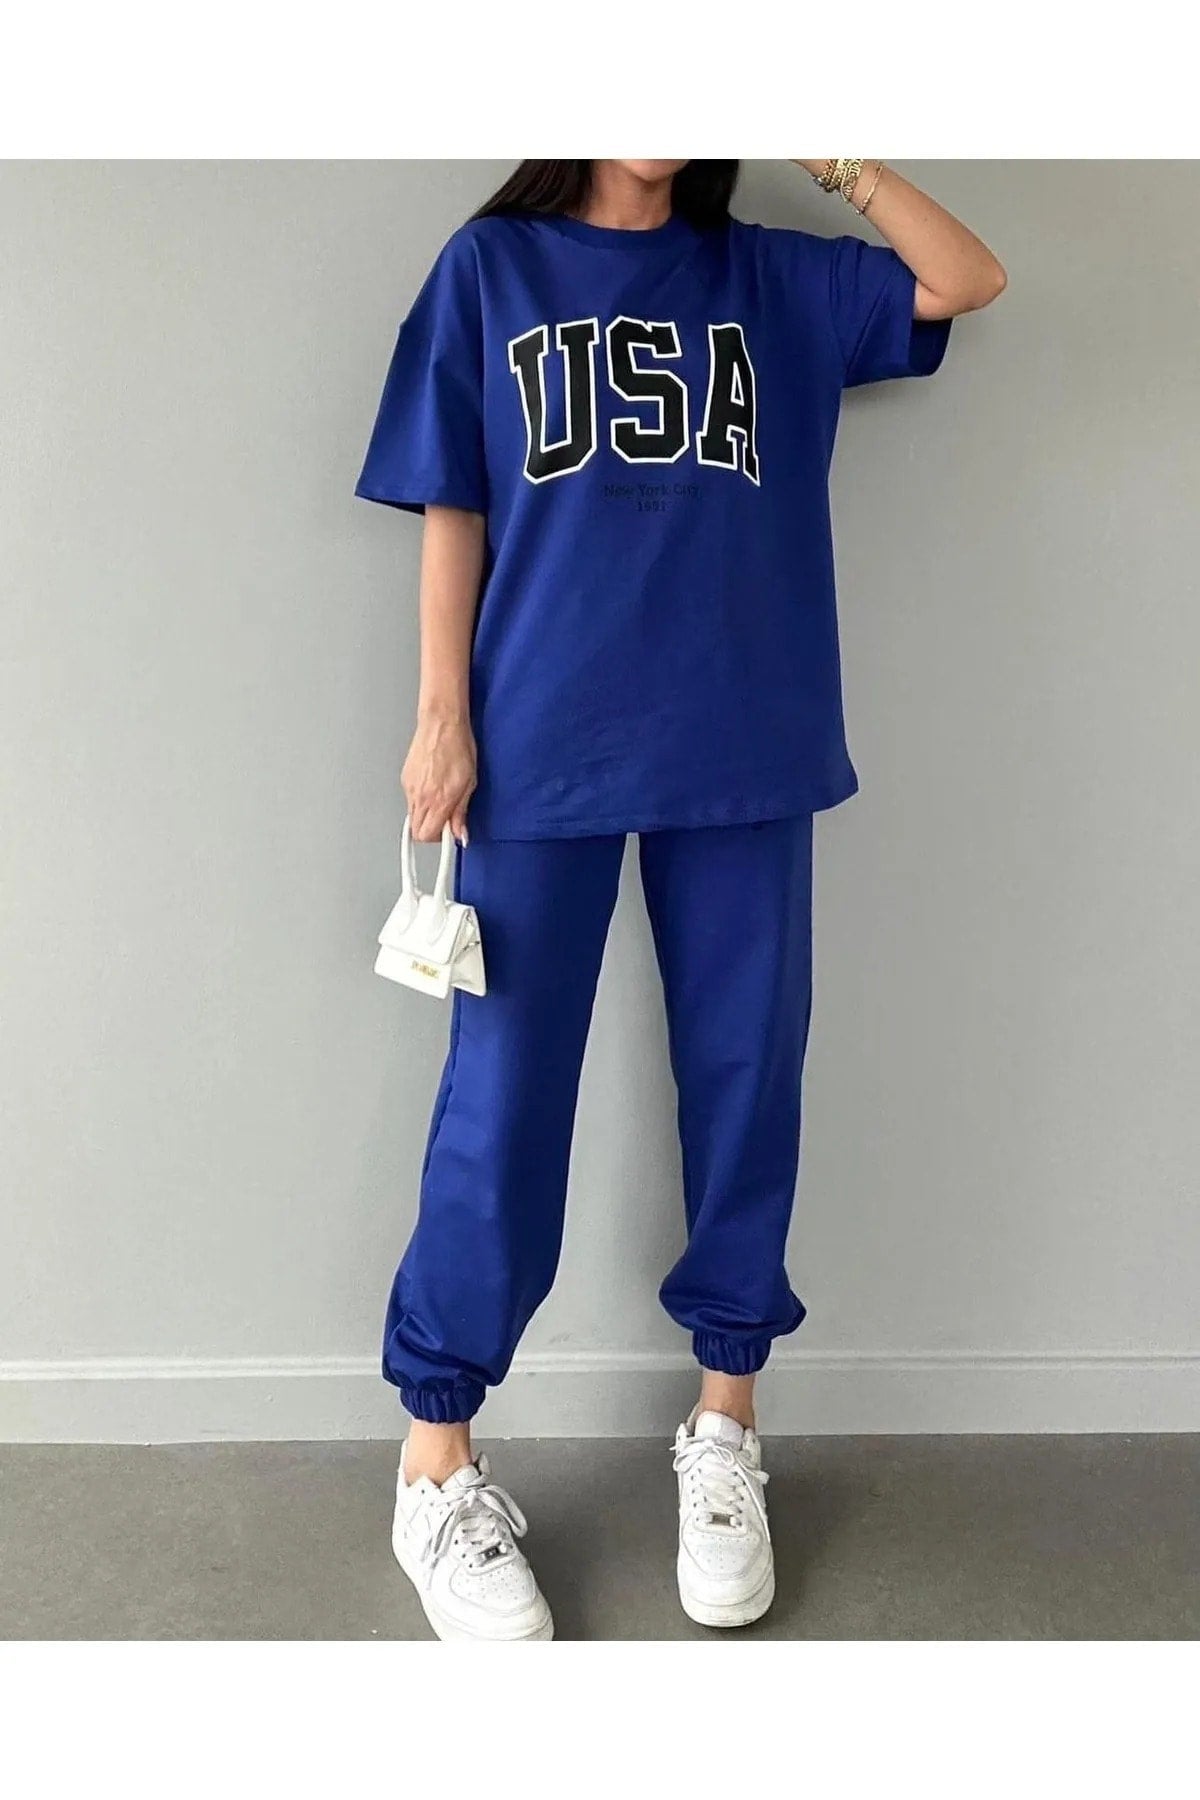 Usa T-shirt Sweatpants Jogger- Blue Printed Bottom Top Tracksuit Suit Oversize Crew Neck